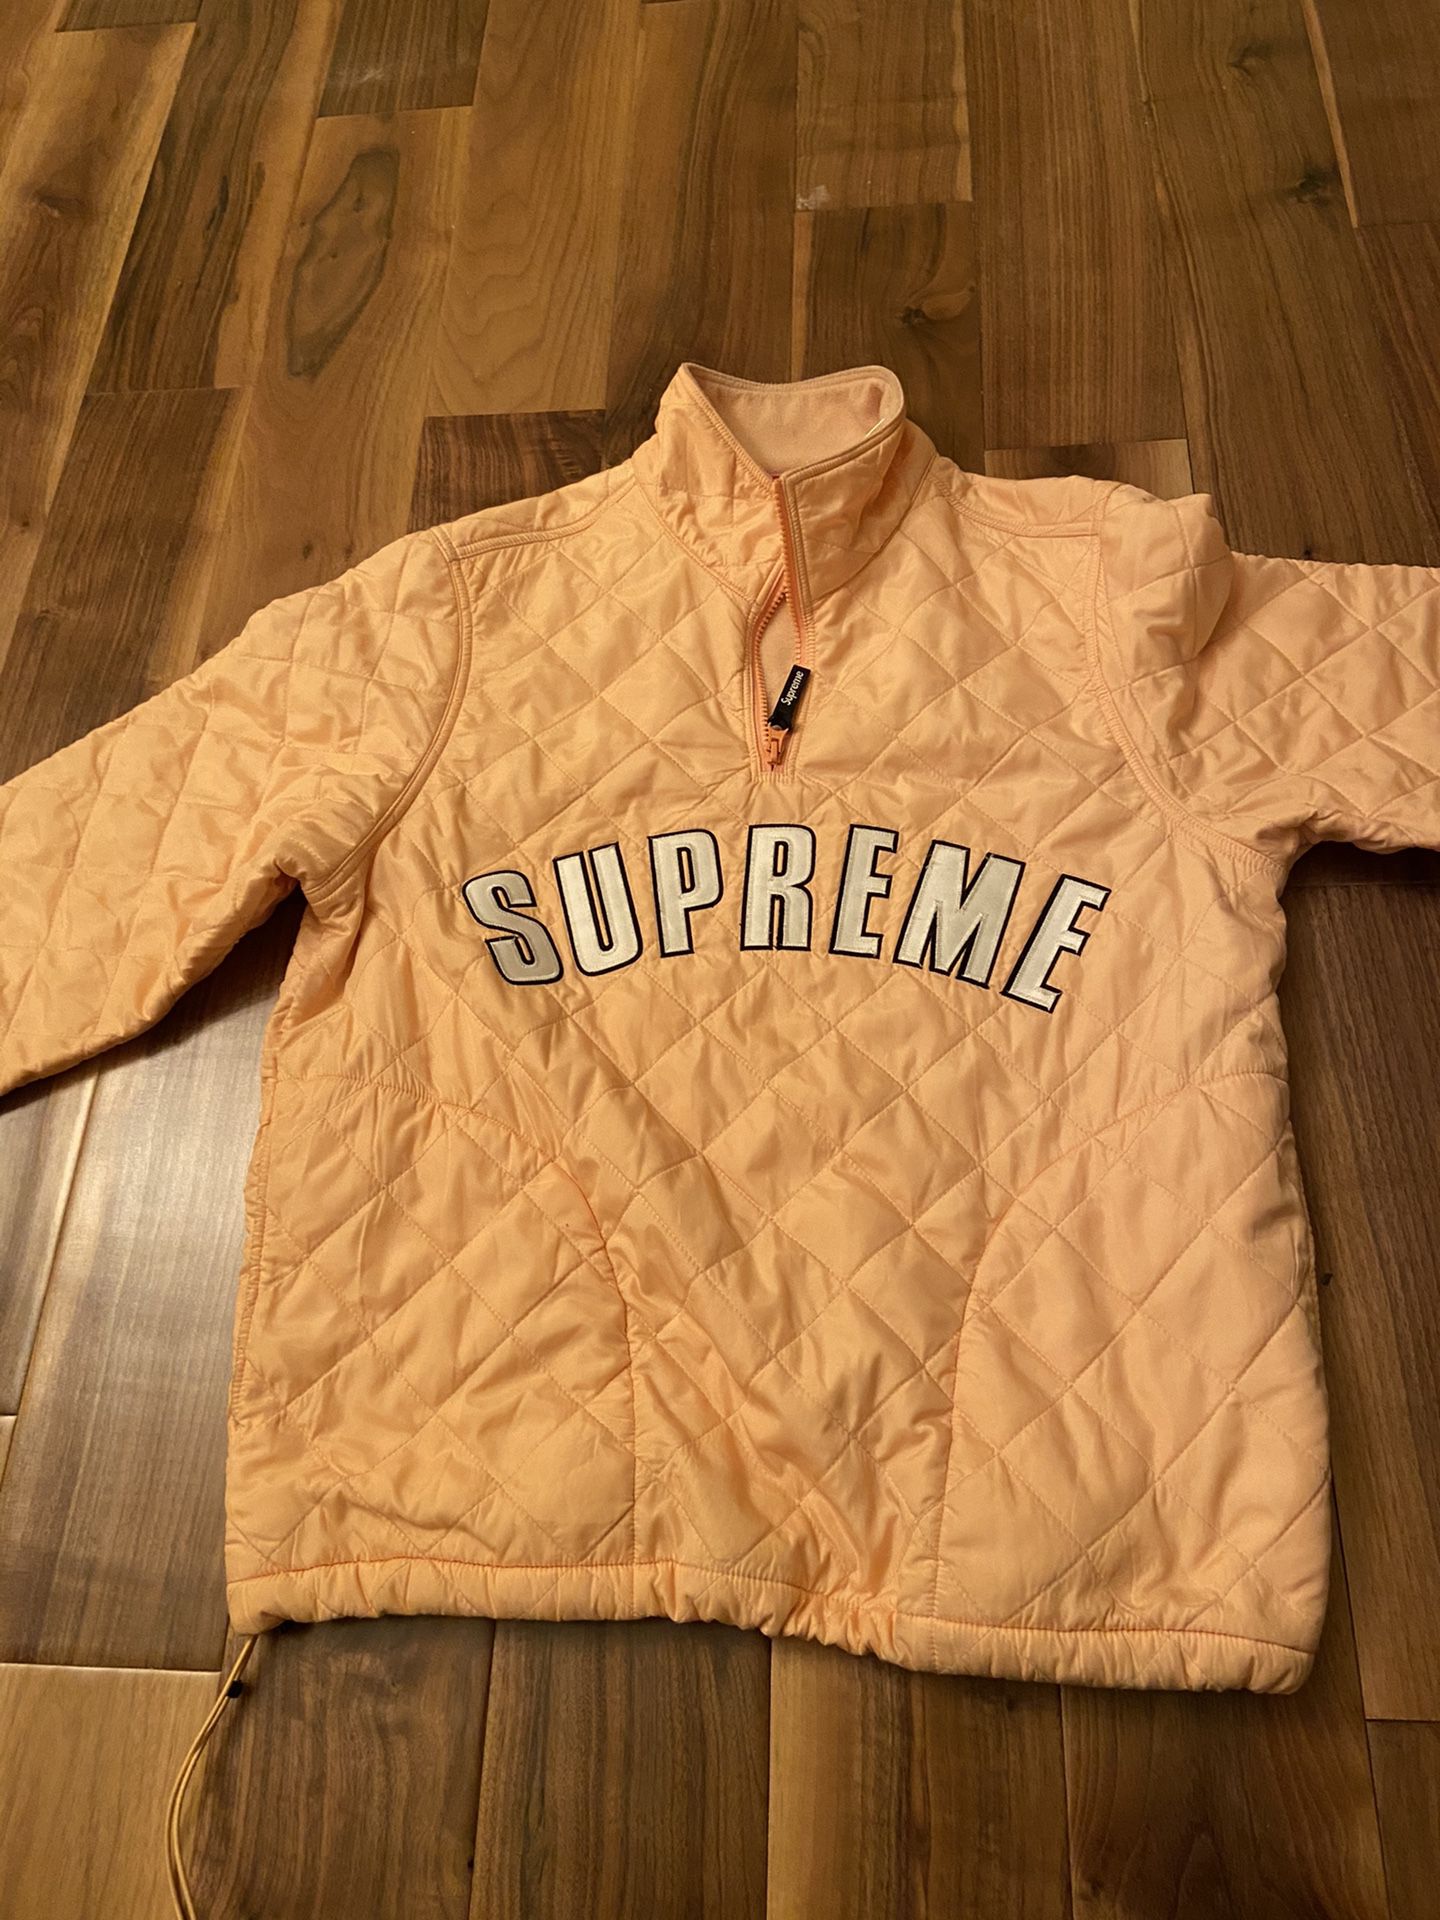 Supreme jacket